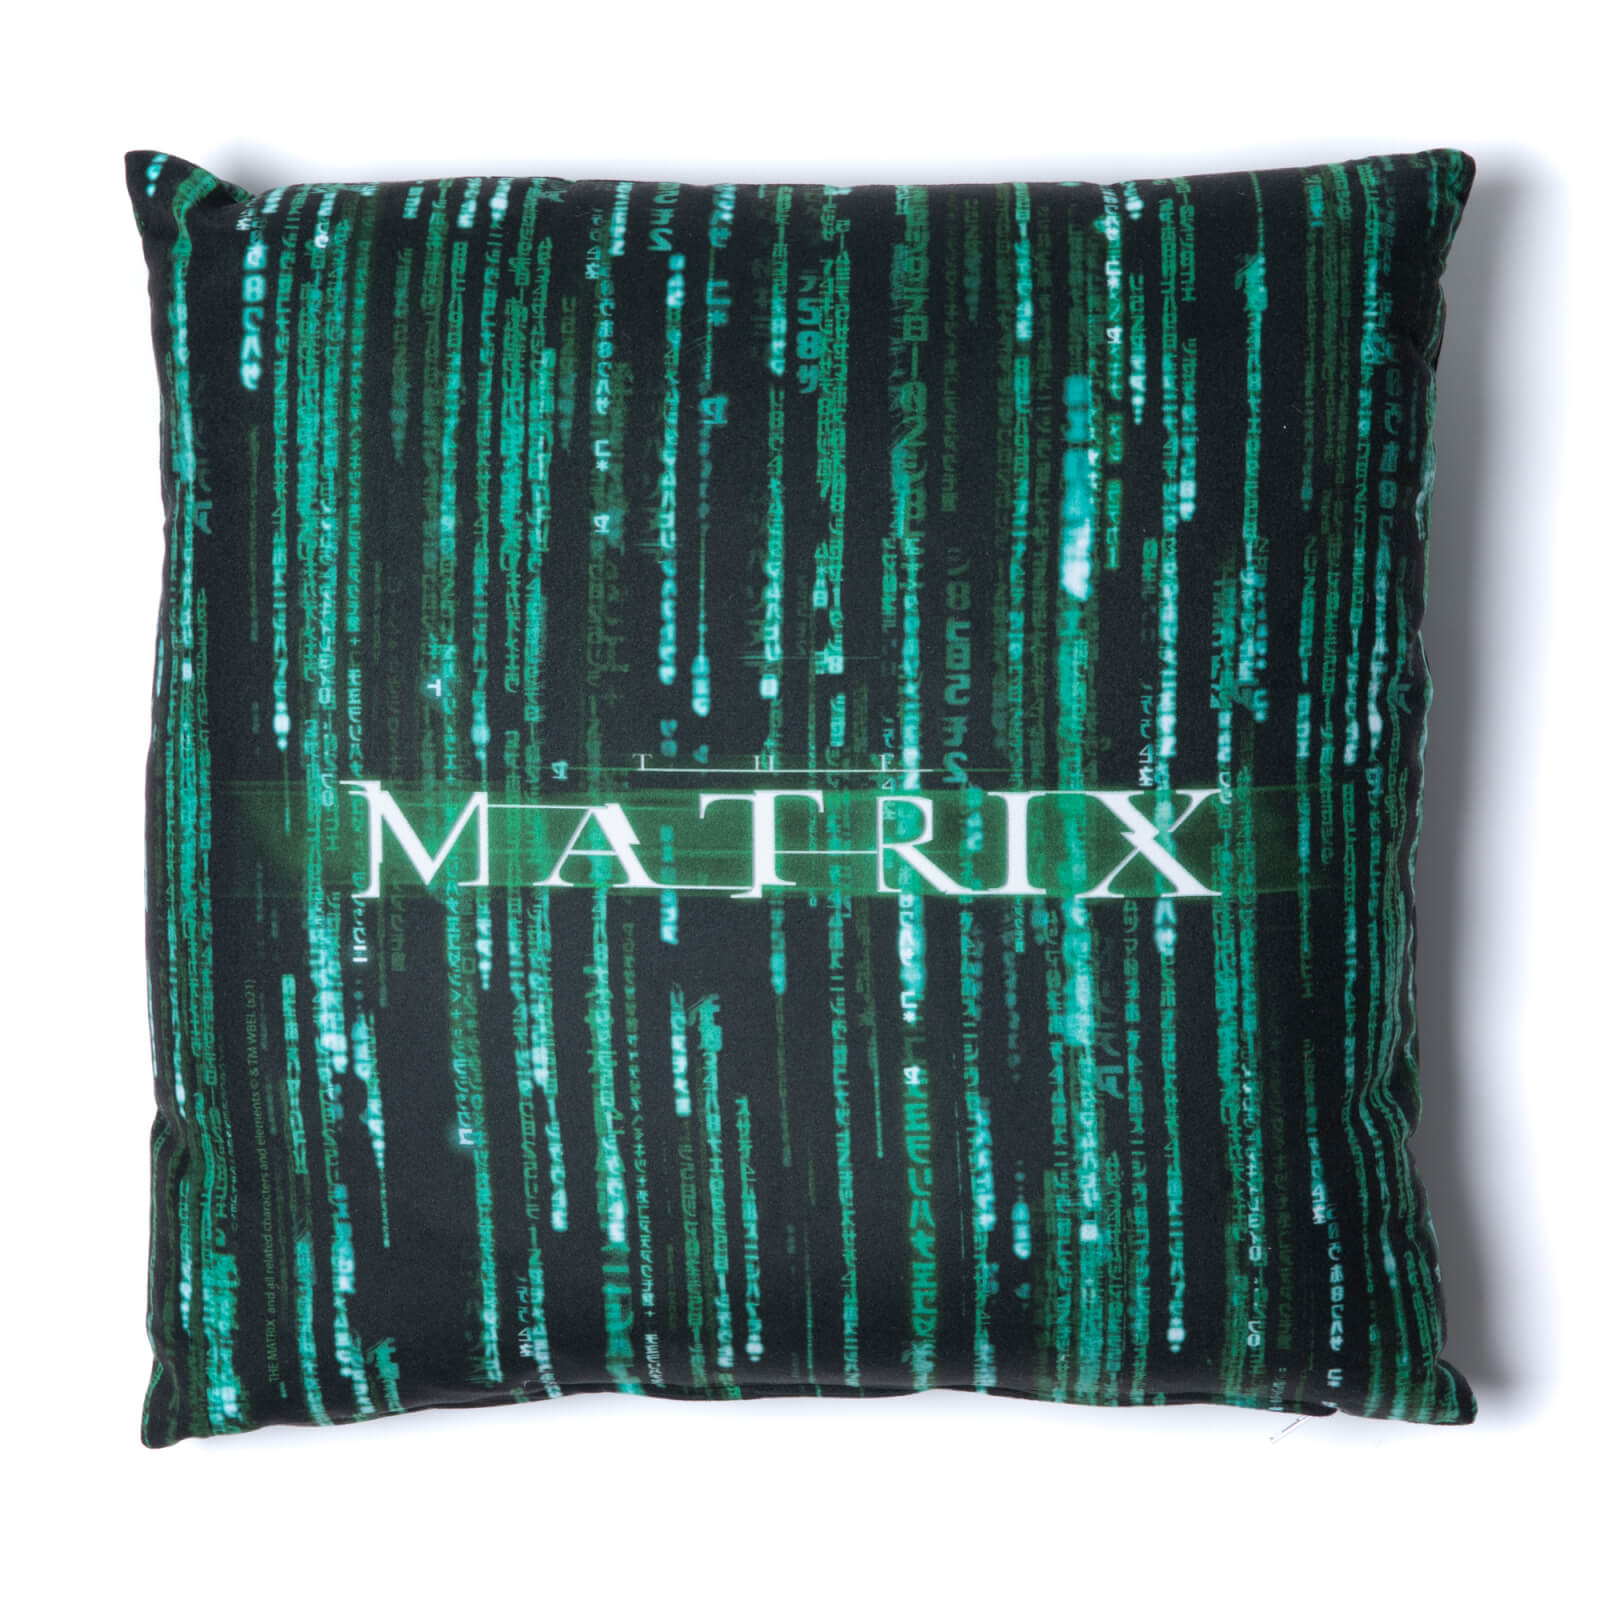 The Matrix Square Cushion - 50x50cm